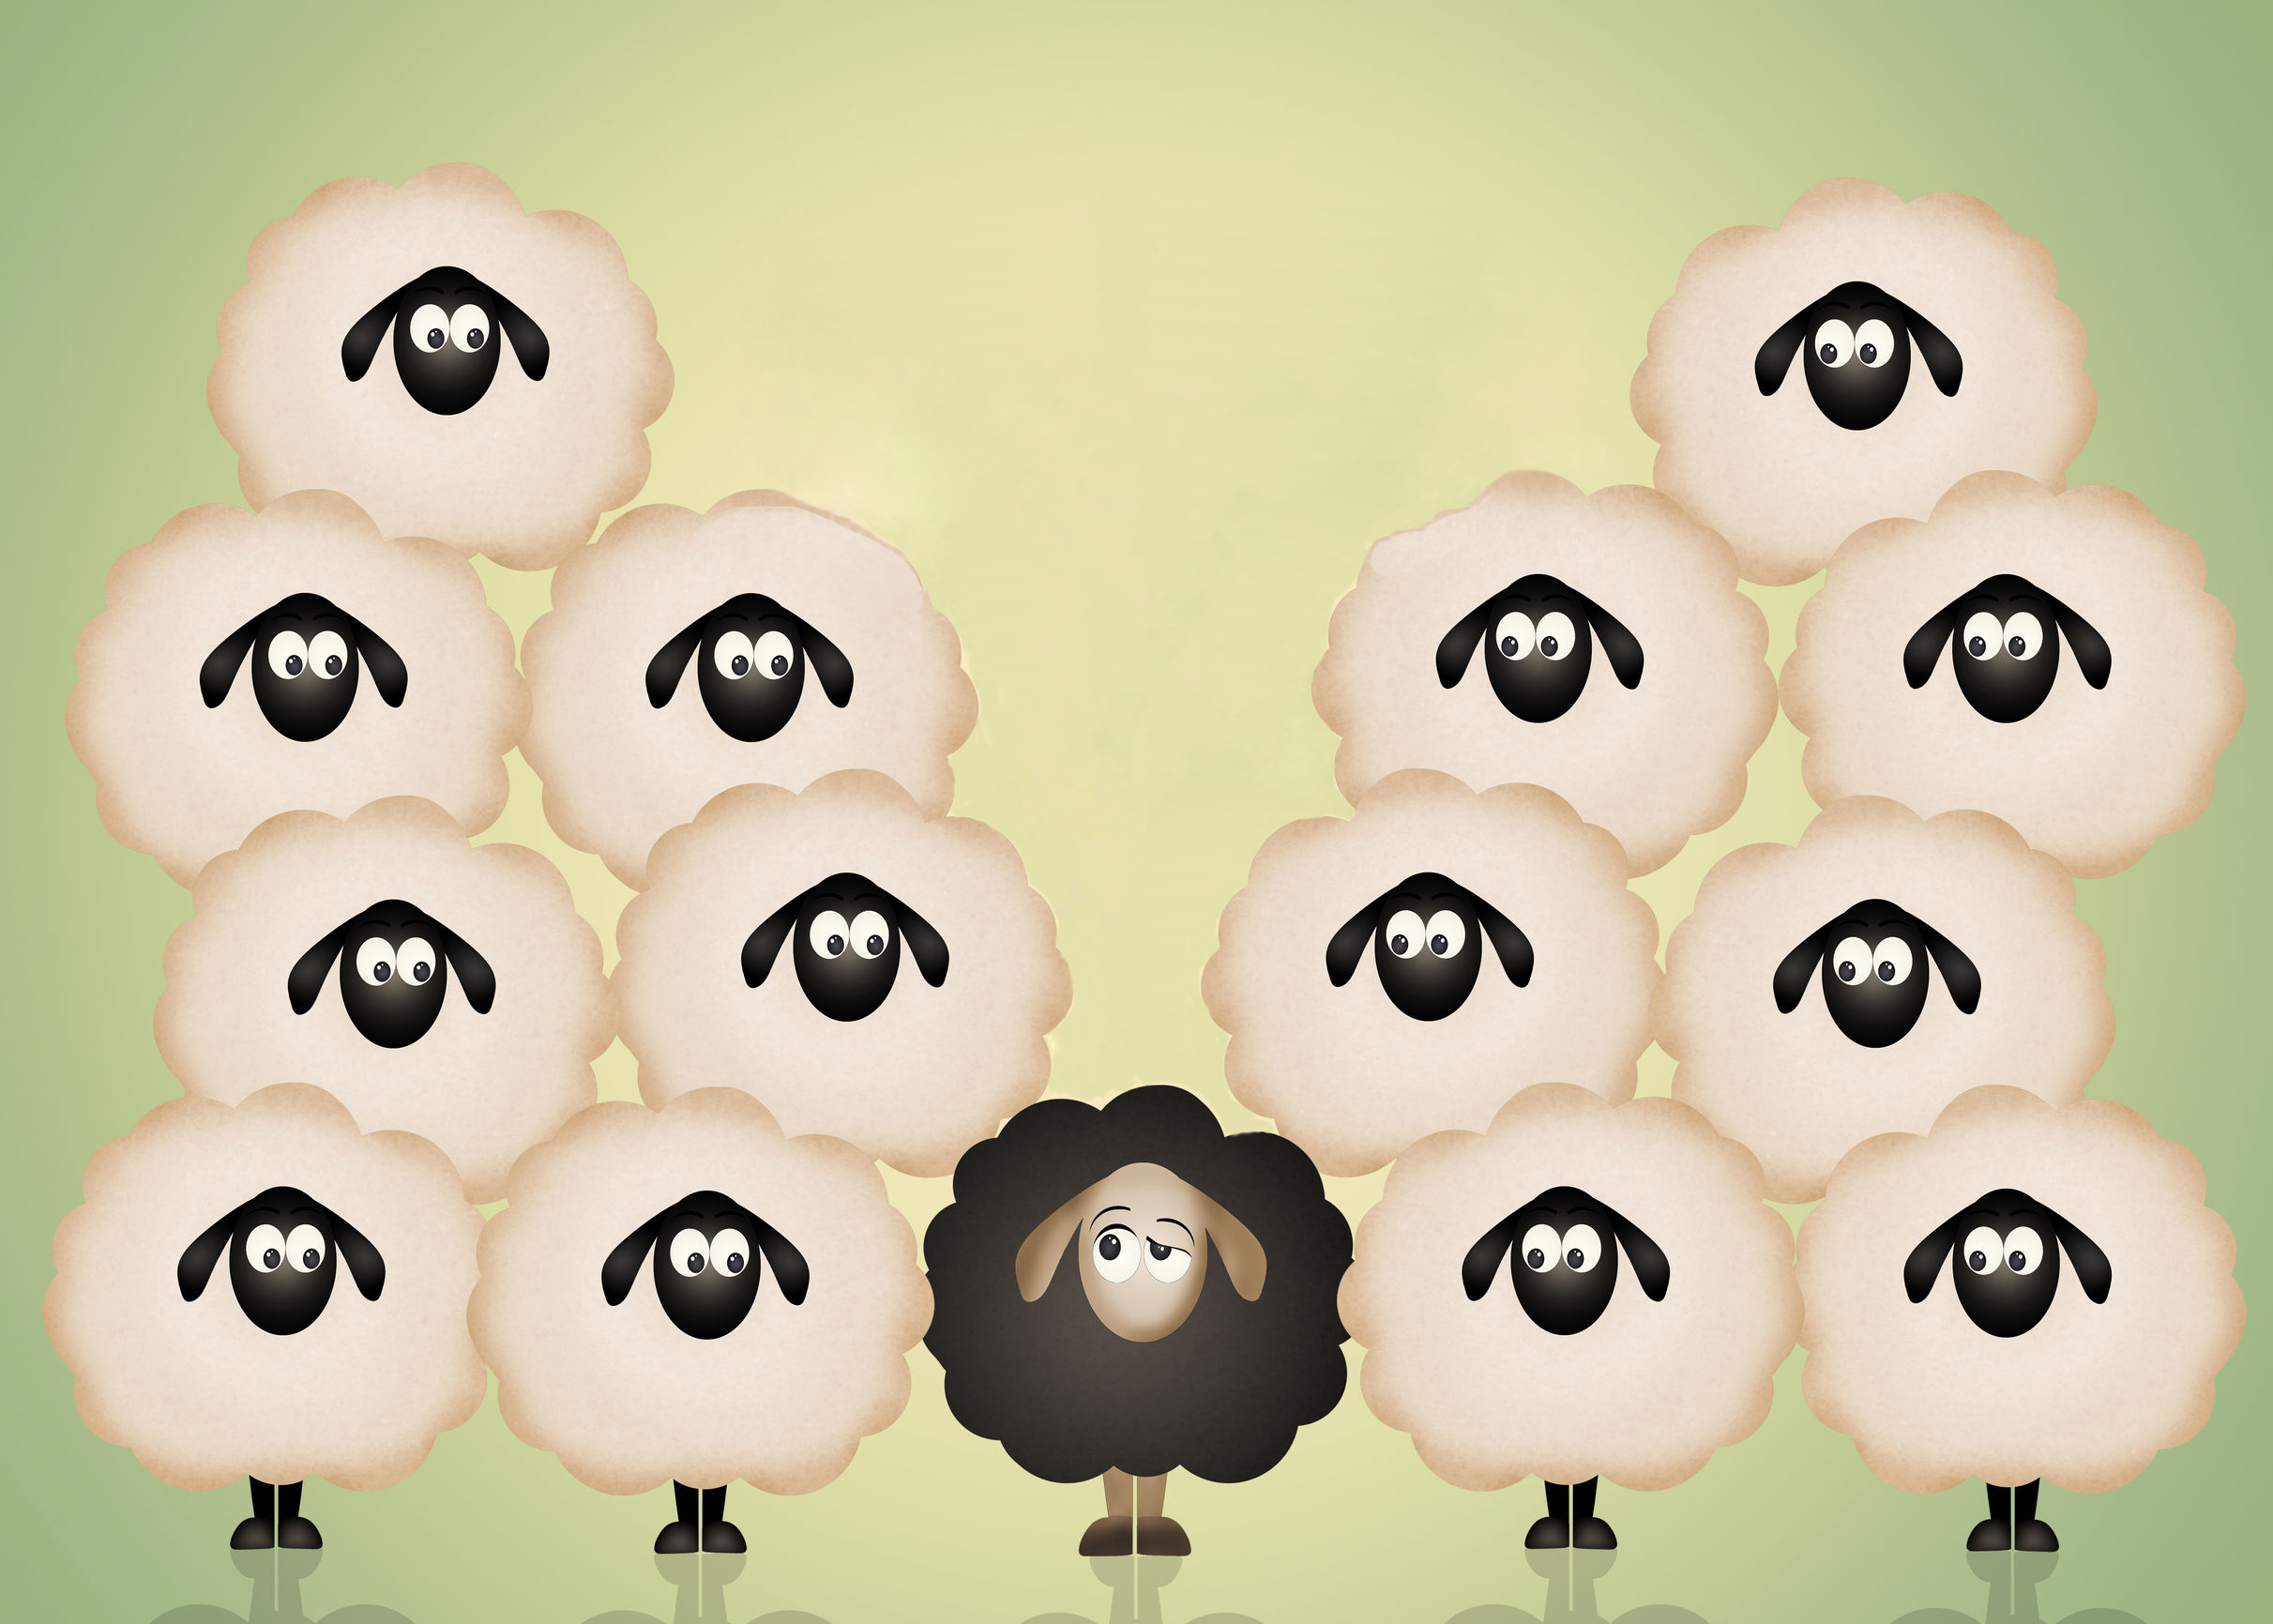 Cartoon of a flock of white sheep surrounding a black sheep